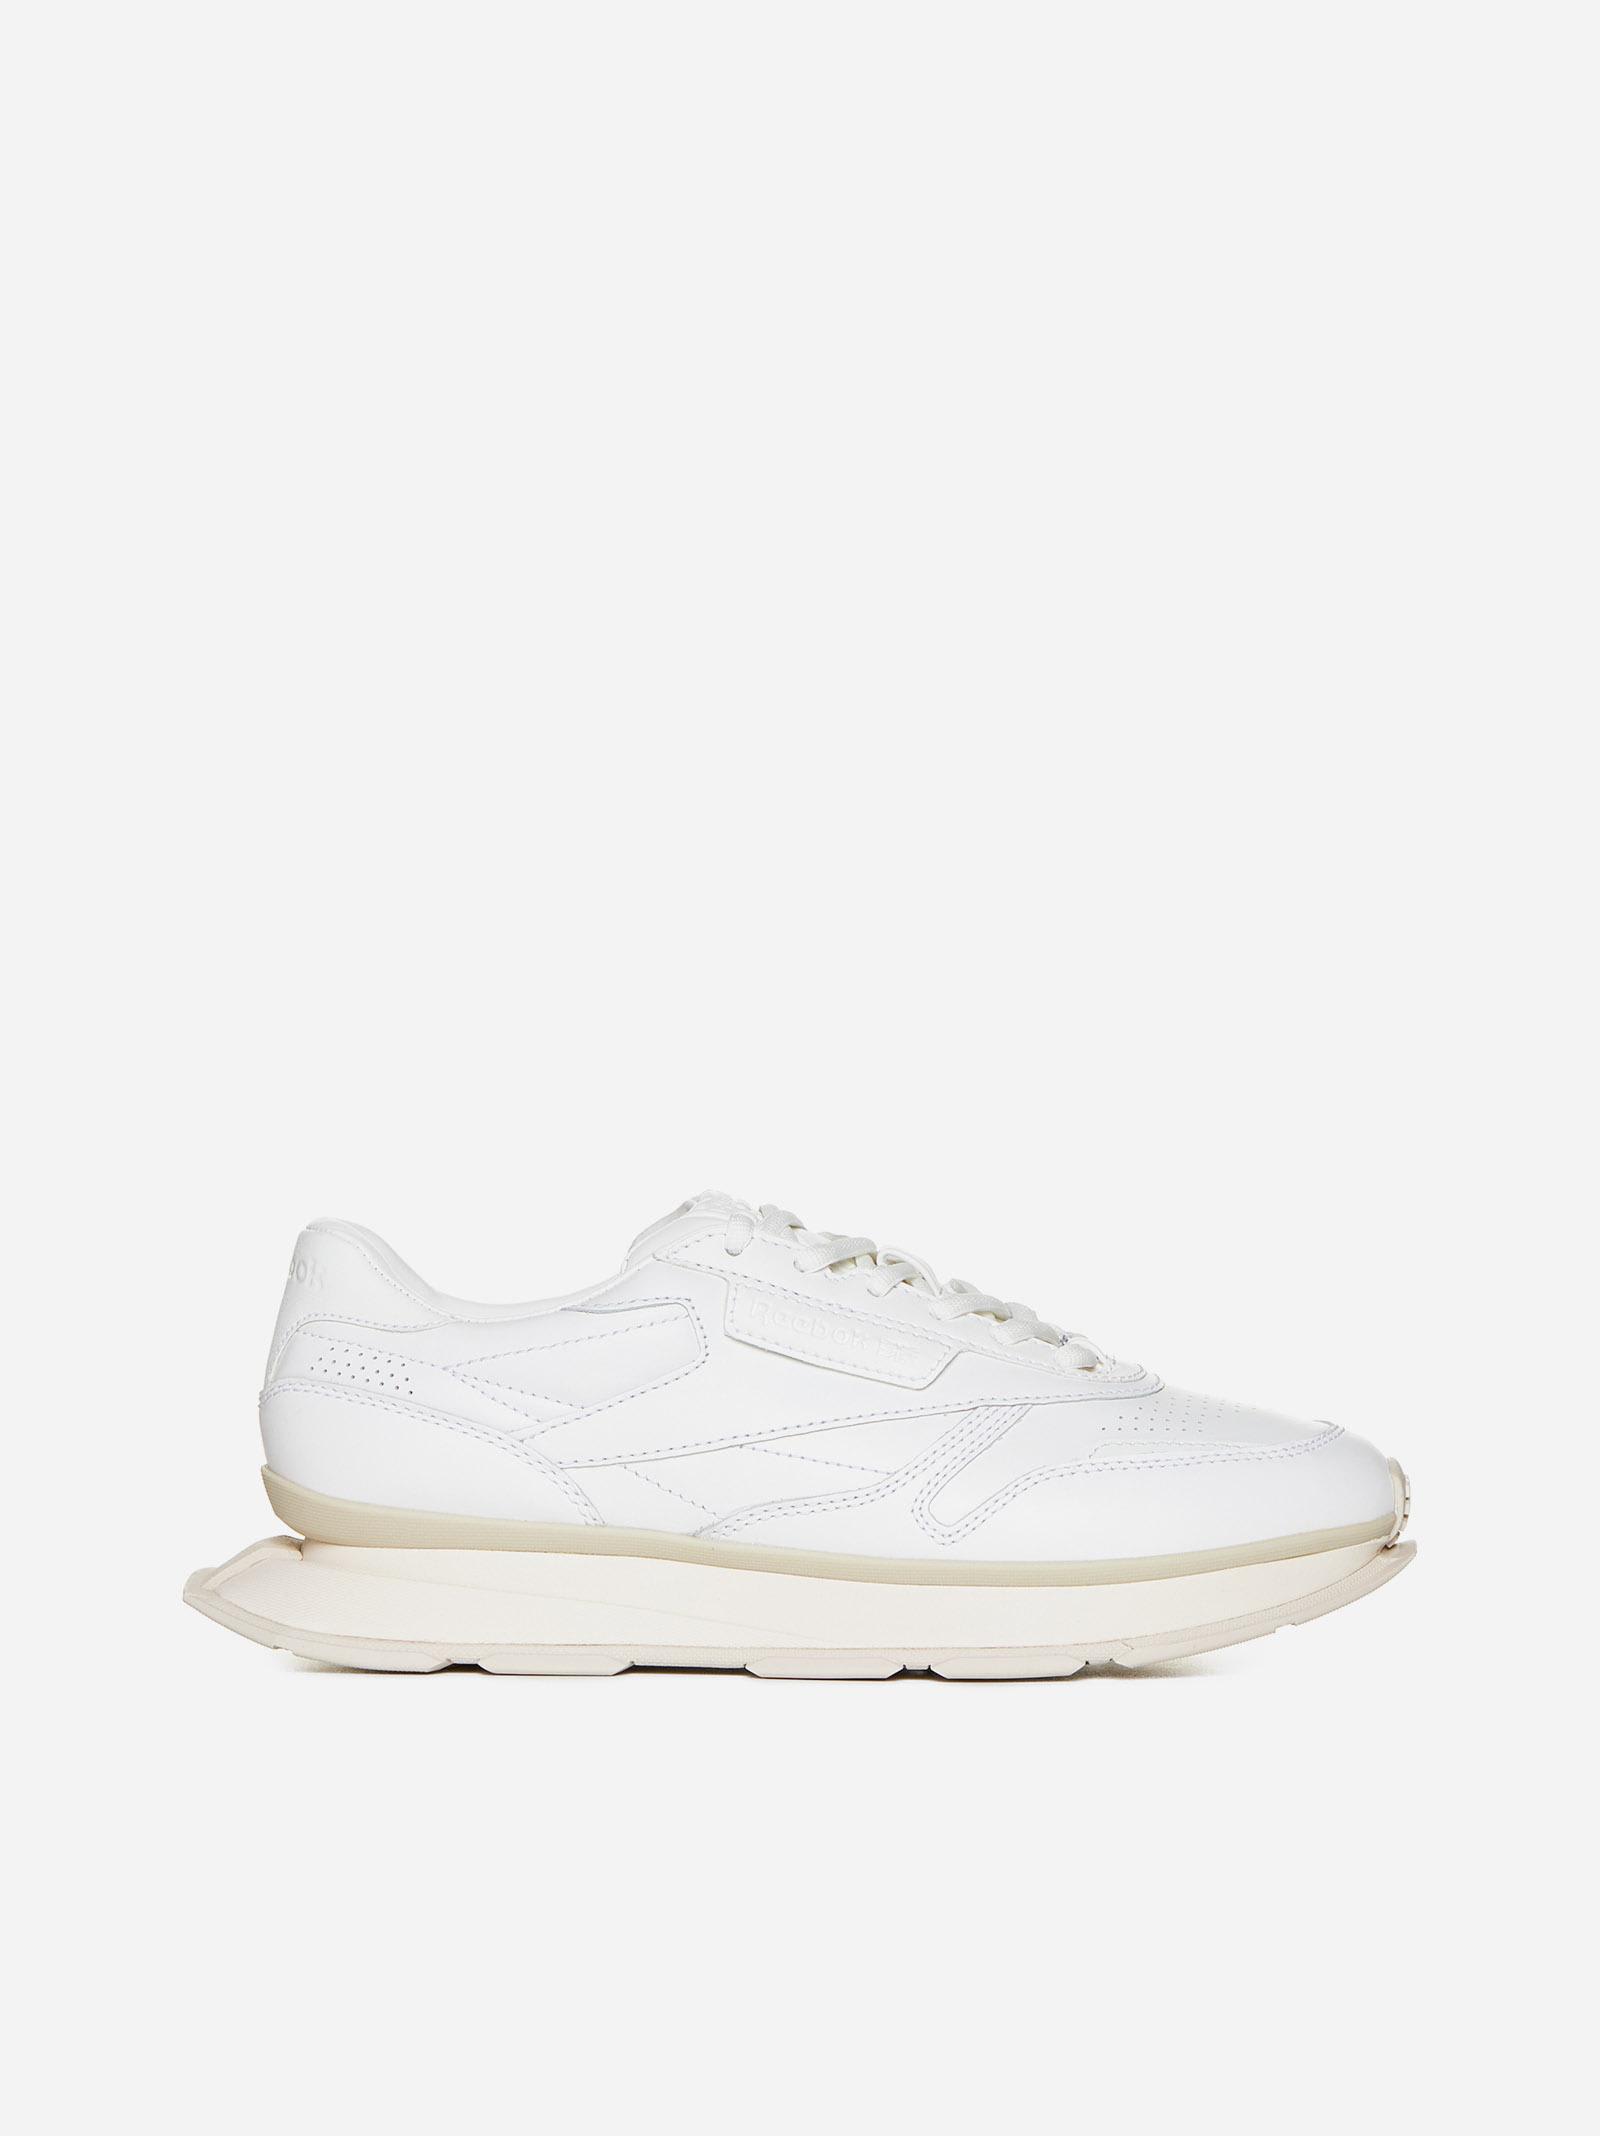 Shop Reebok Ltd Leather Sneakers In White Lthe